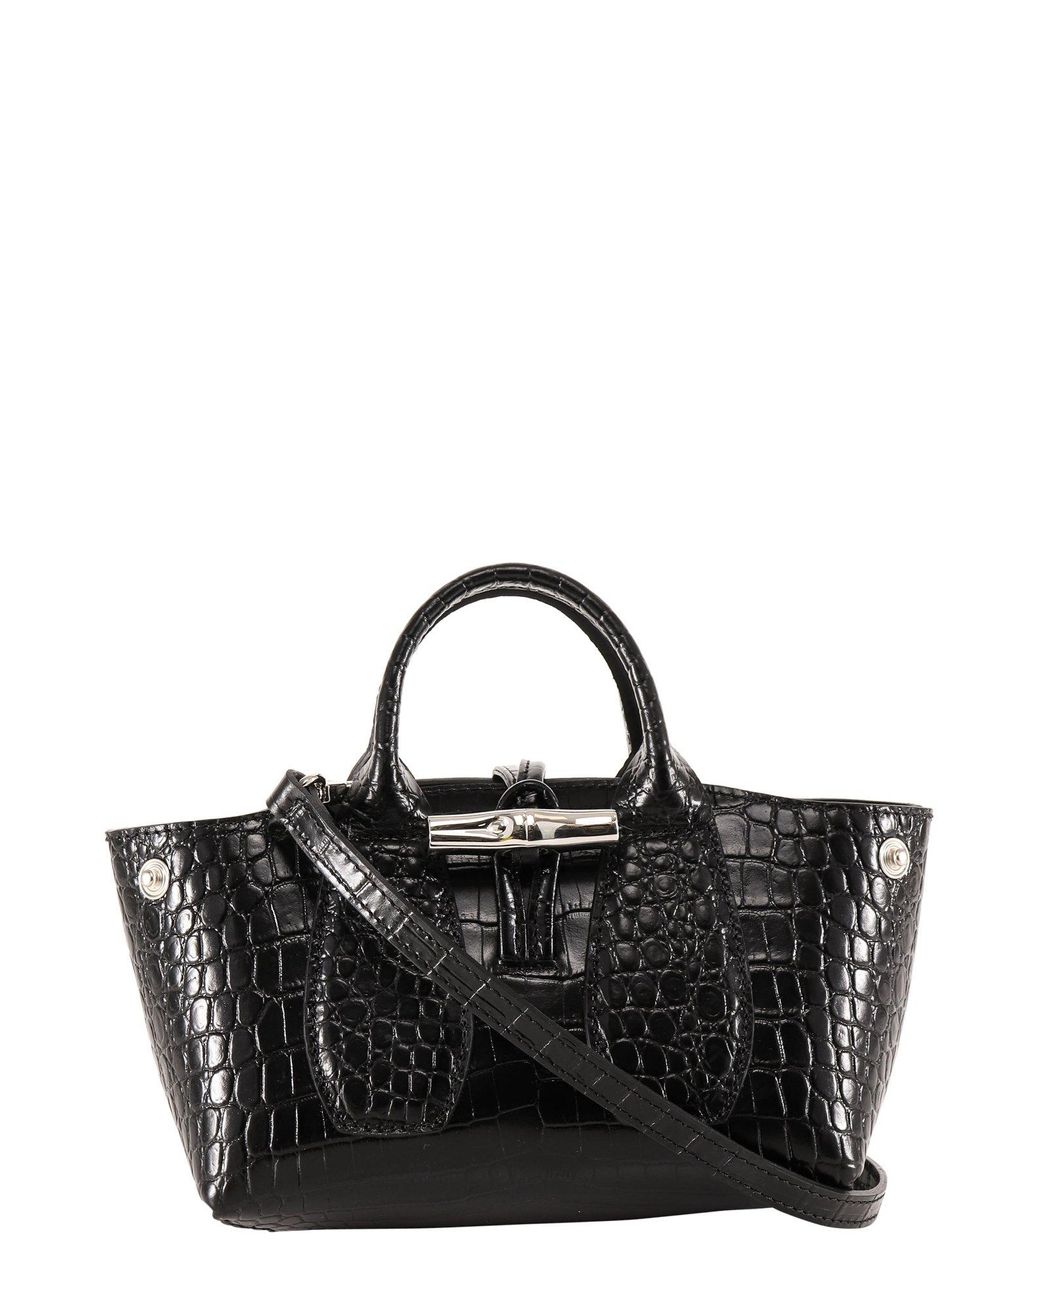 Longchamp Leather Roseau Xs Top Handle Bag in Black - Lyst